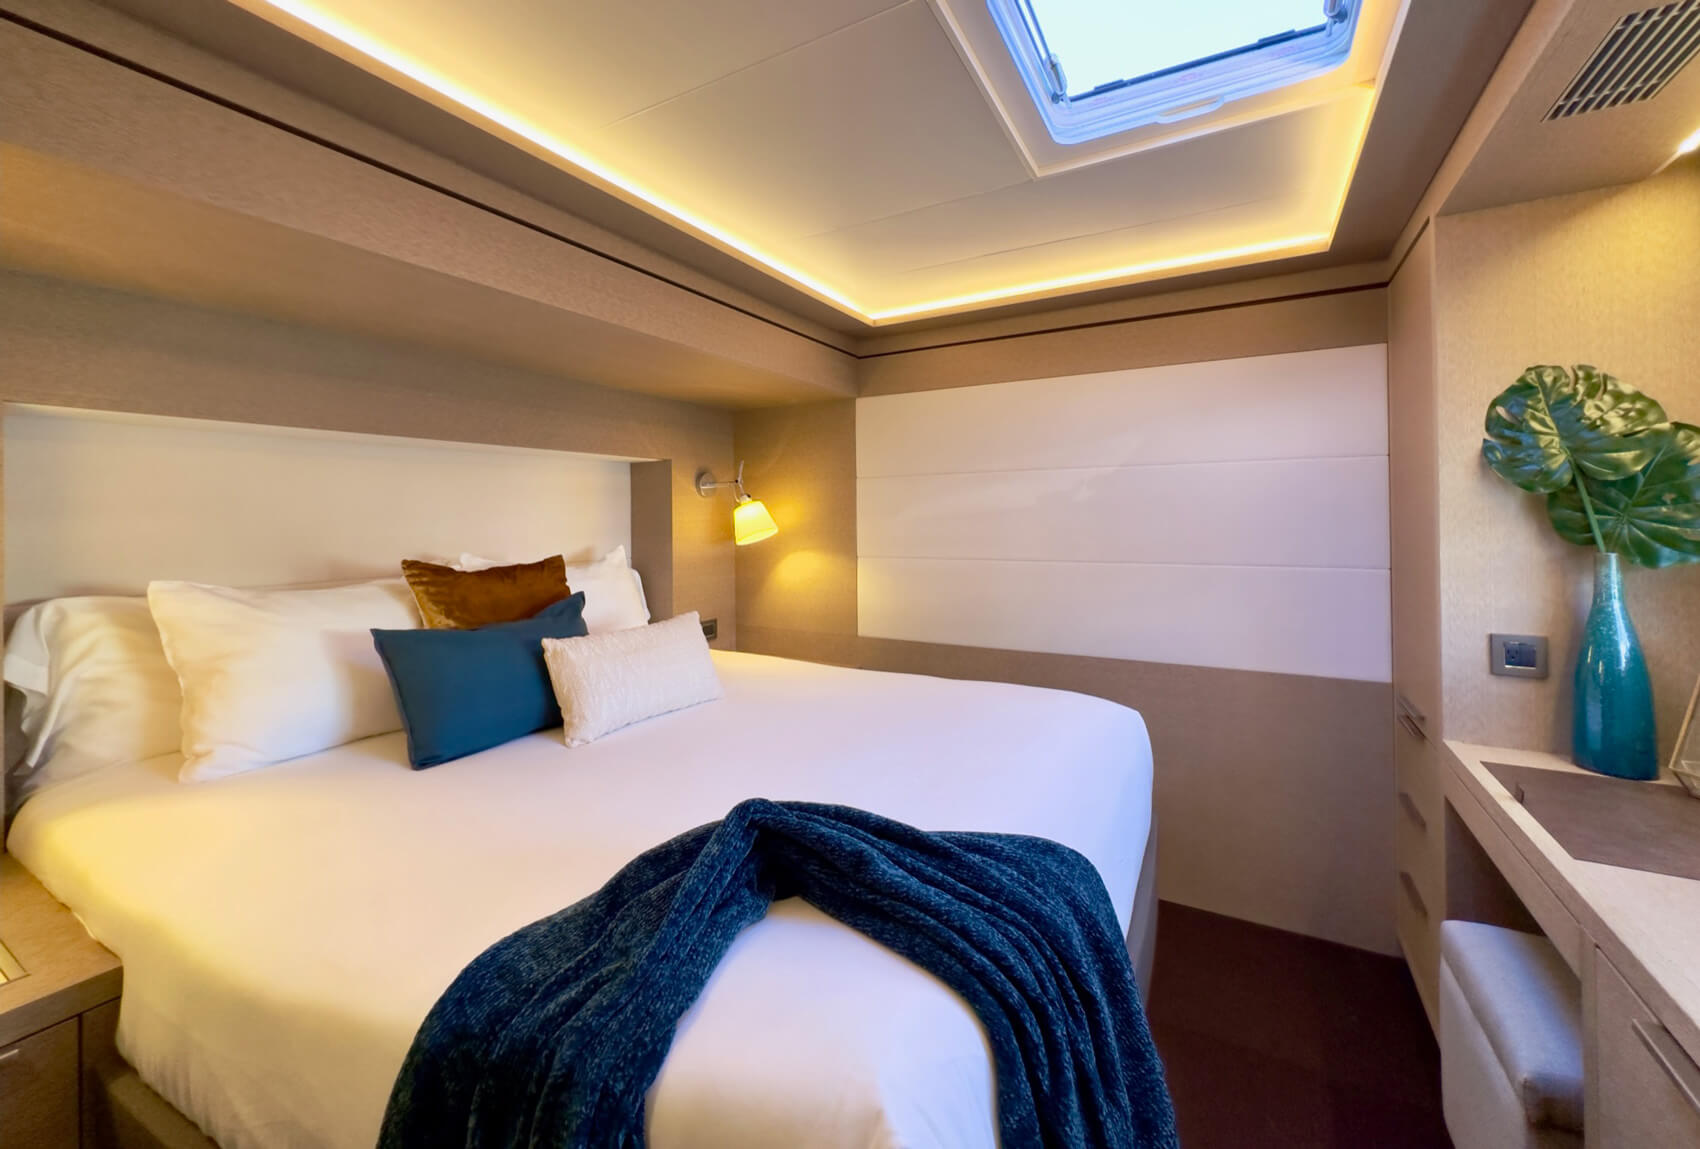 yacht bedroom interior